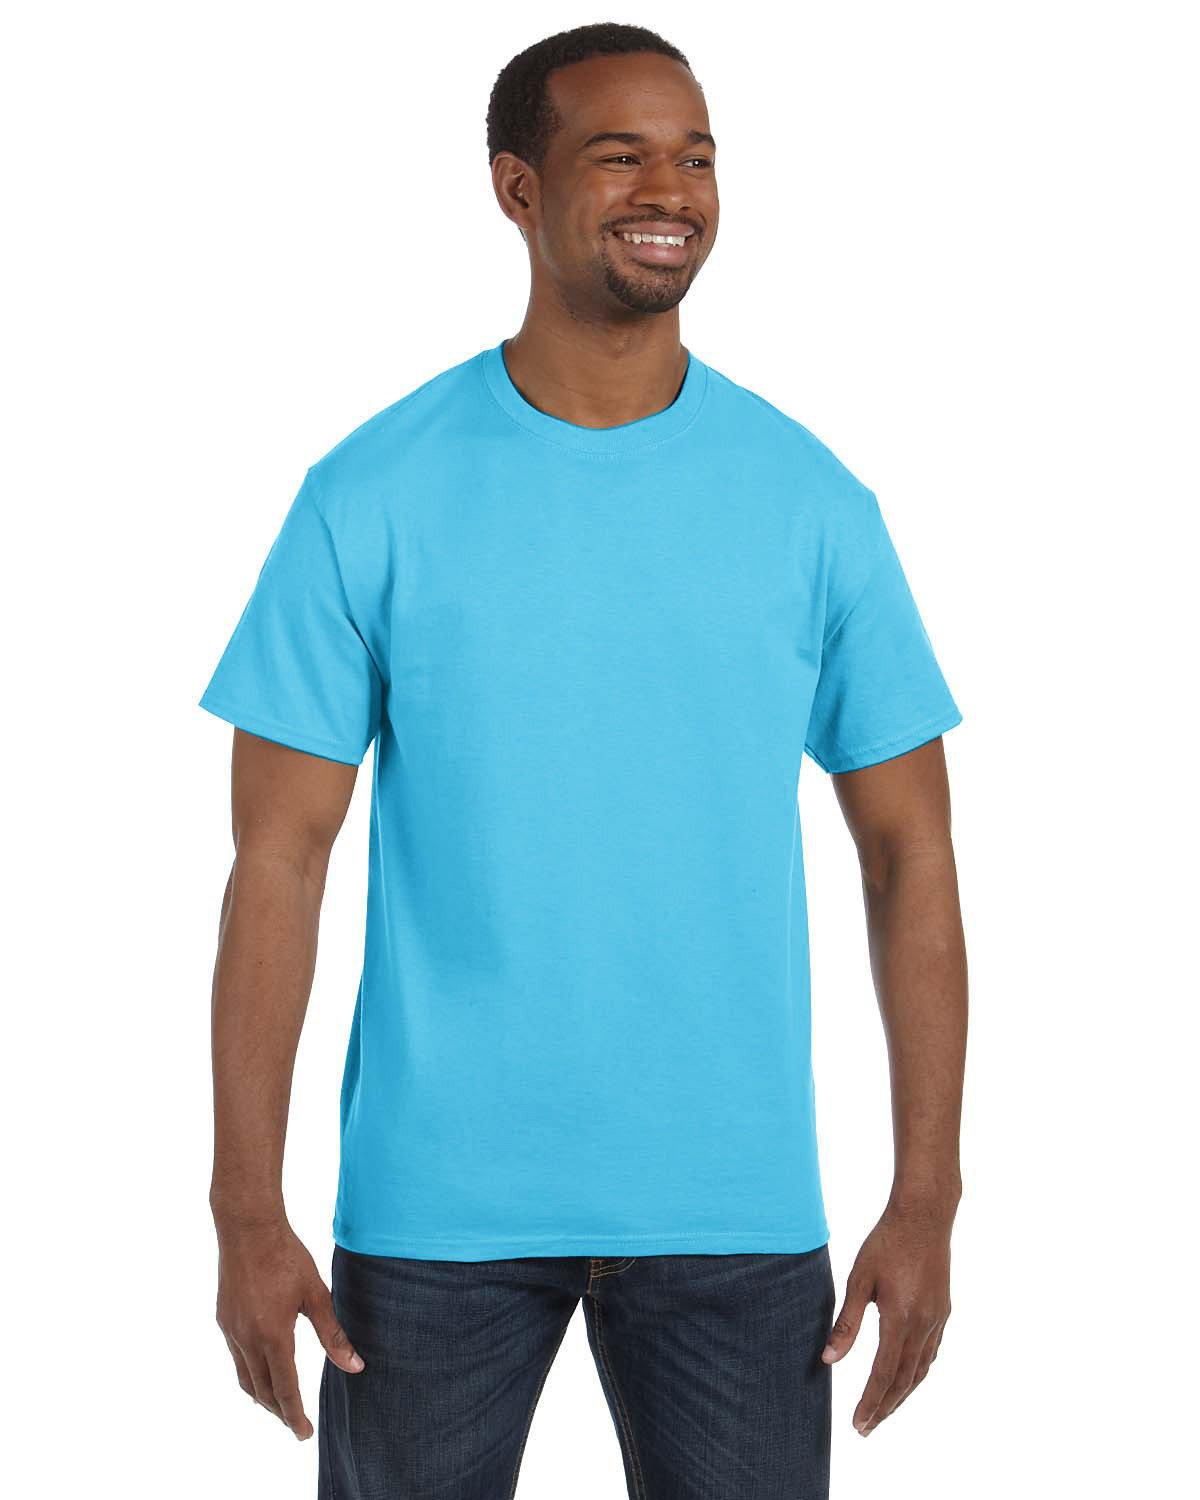 https://images.shirtspace.com/fullsize/a53jCkHYp4Oz9qtWZ1fkaQ%3D%3D/331291/2316-hanes-5250t-authentic-t-100-cotton-t-shirt-front-aquatic-blue.jpg